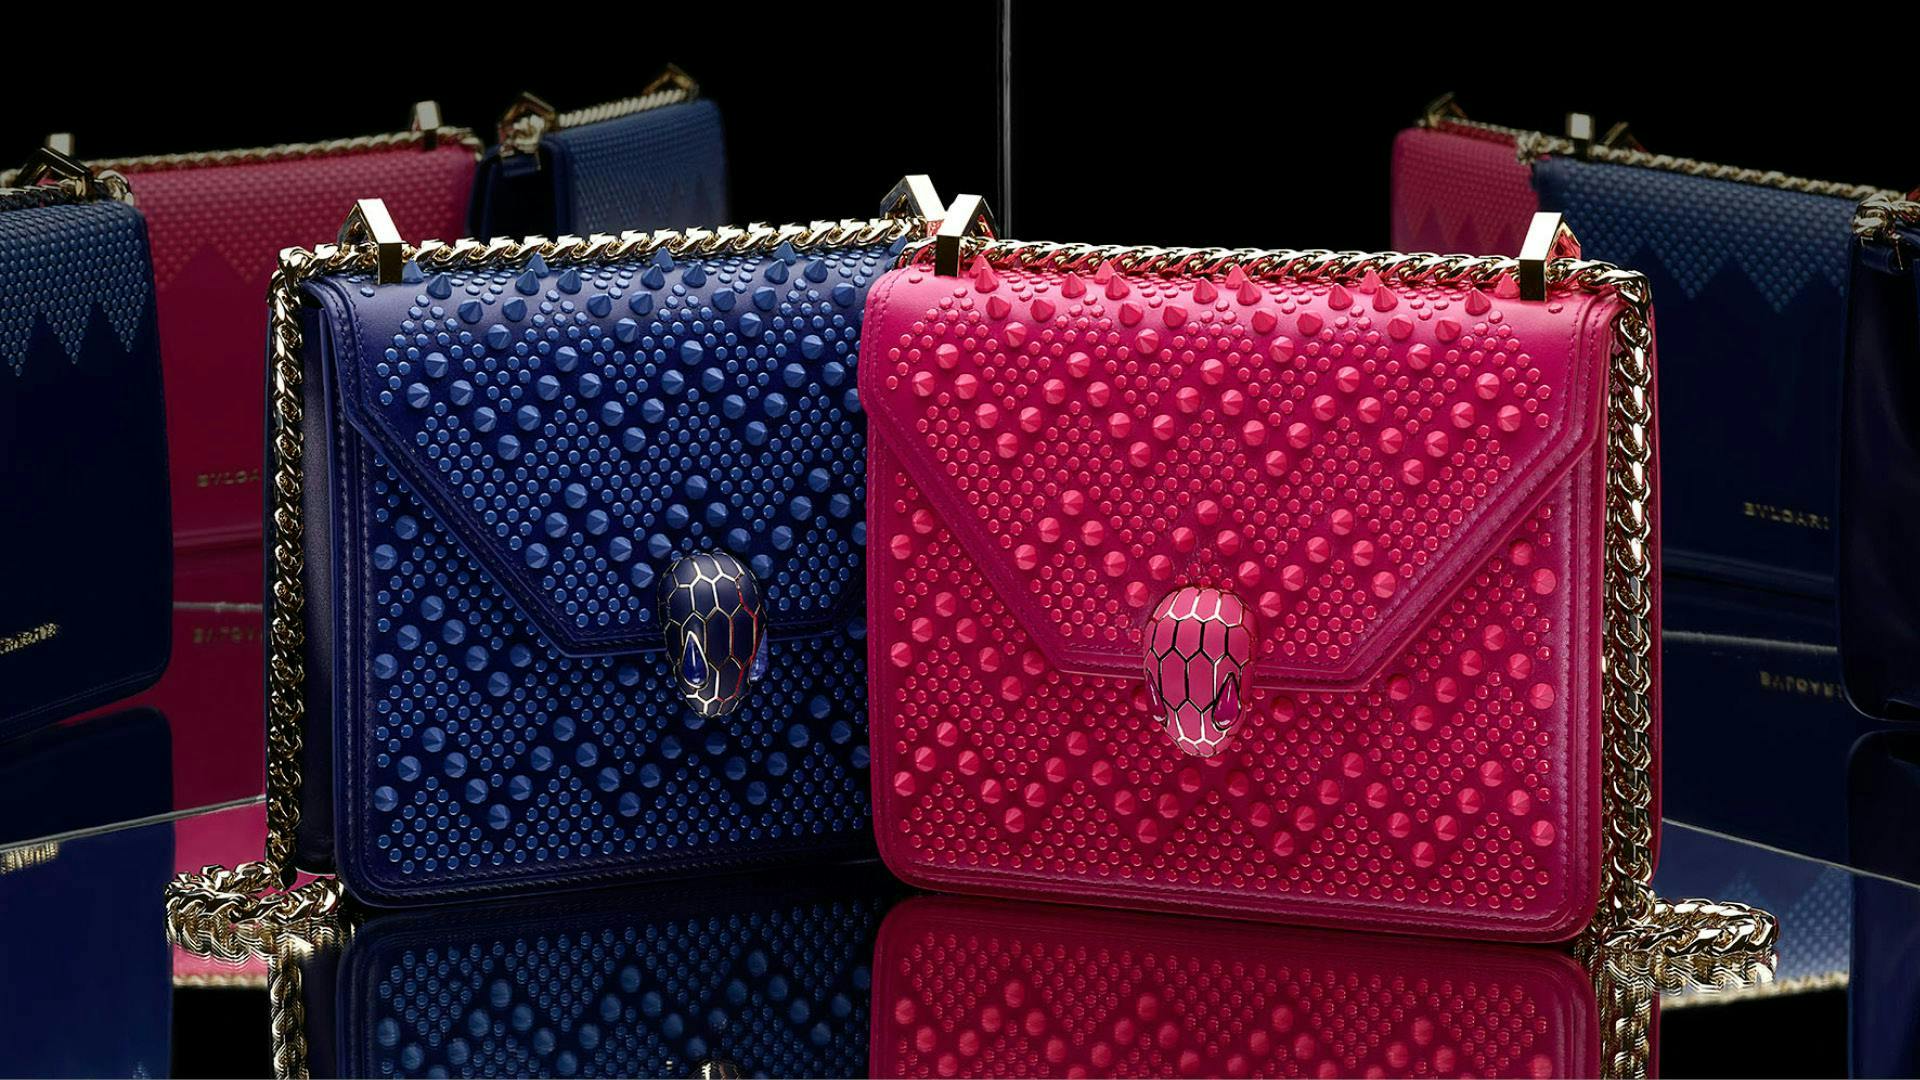 purse handbag accessories bag accessory